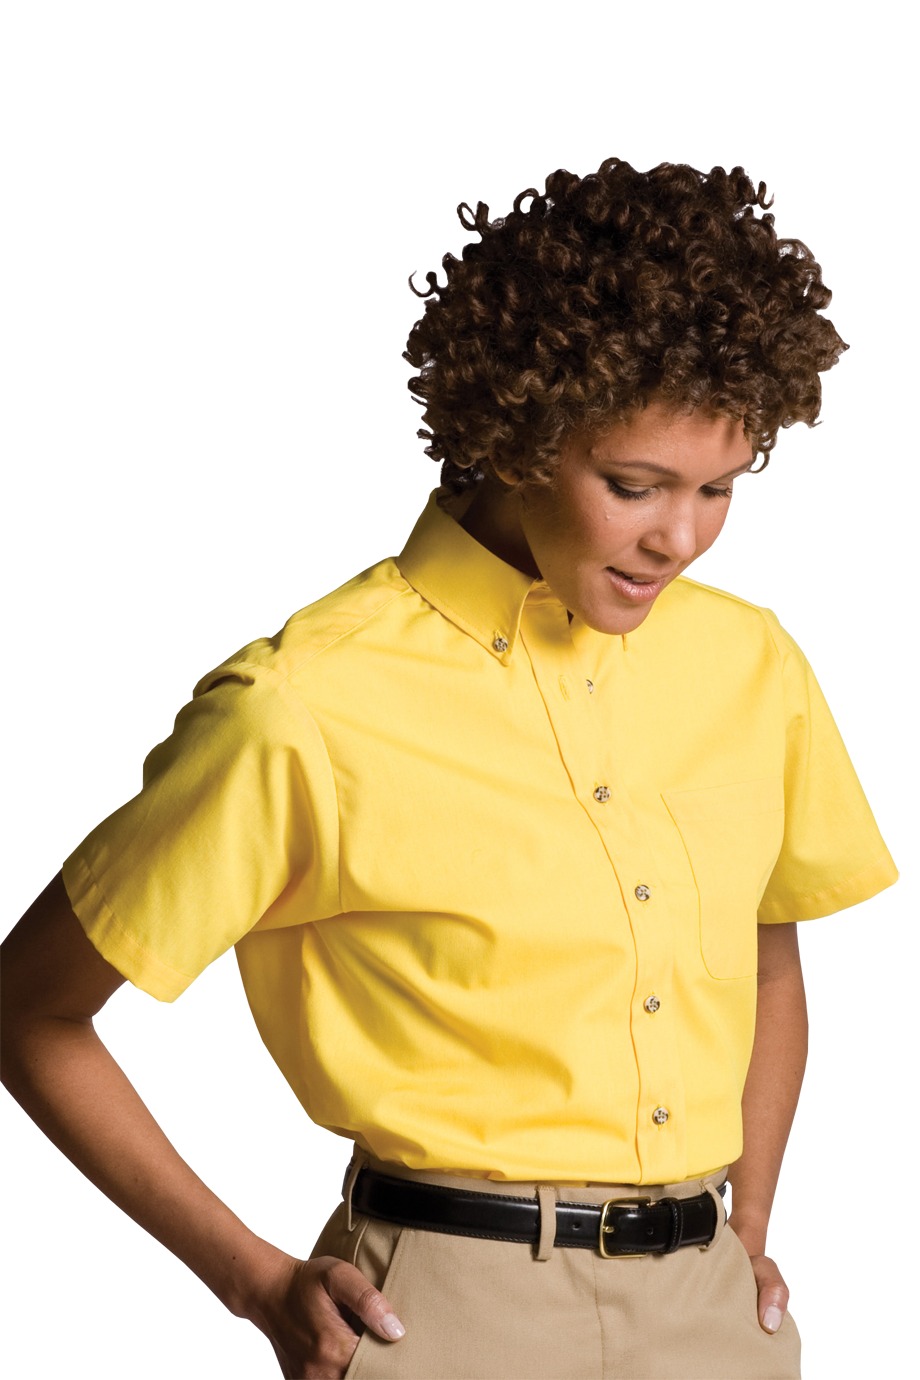 Edwards Garment 5230 - Women's Easy Care Short Sleeve Poplin Shirt